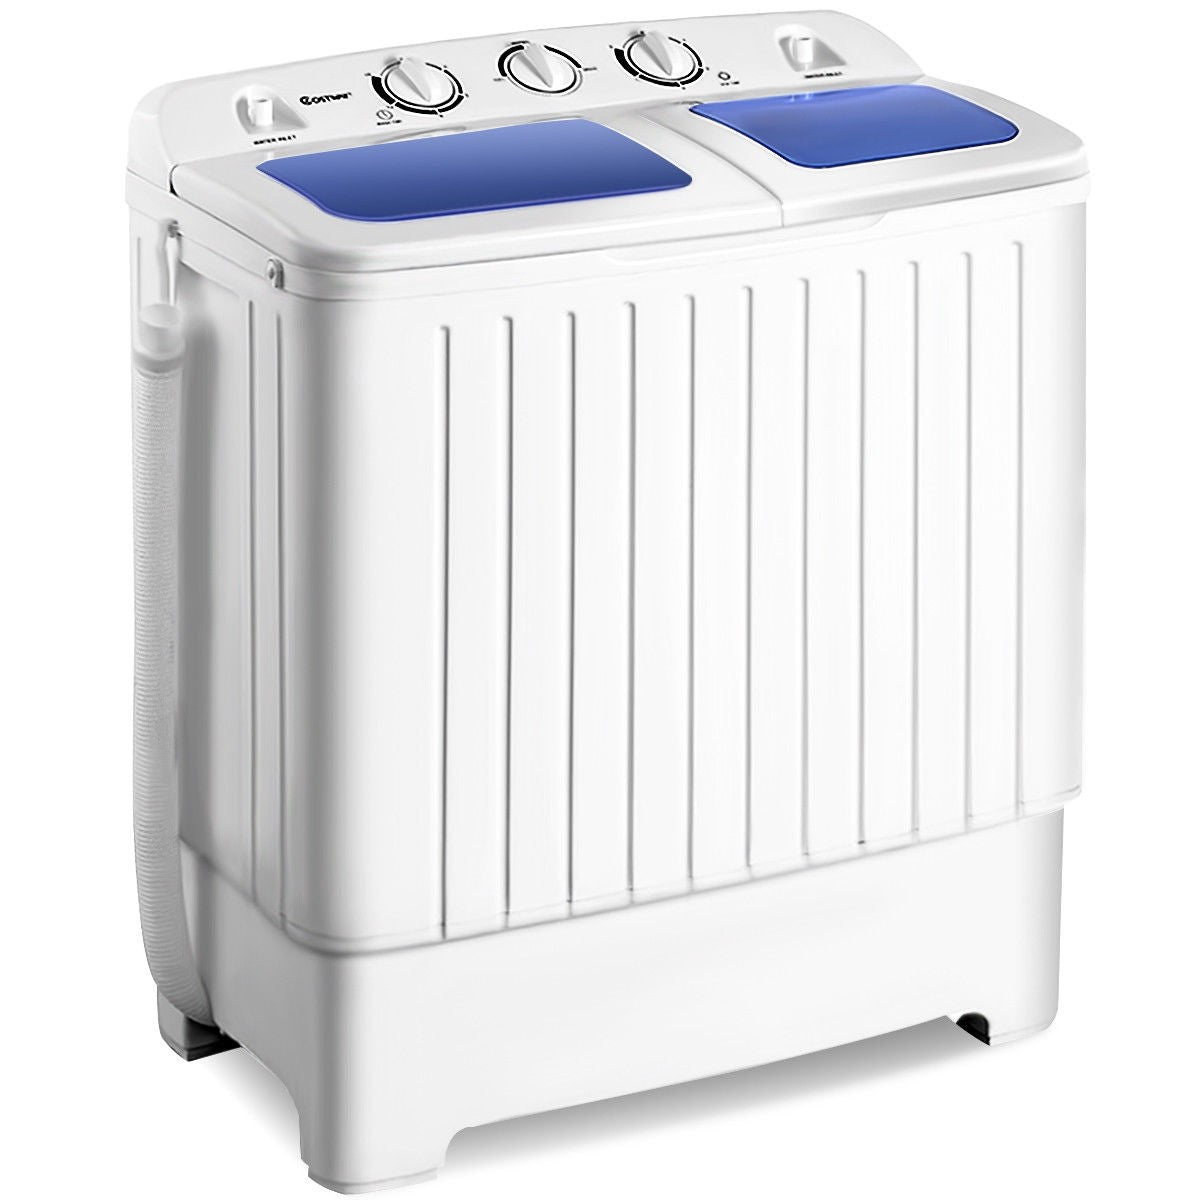 20 lbs Washer Spain Spinner Portable Washing Machine, Blue+ White